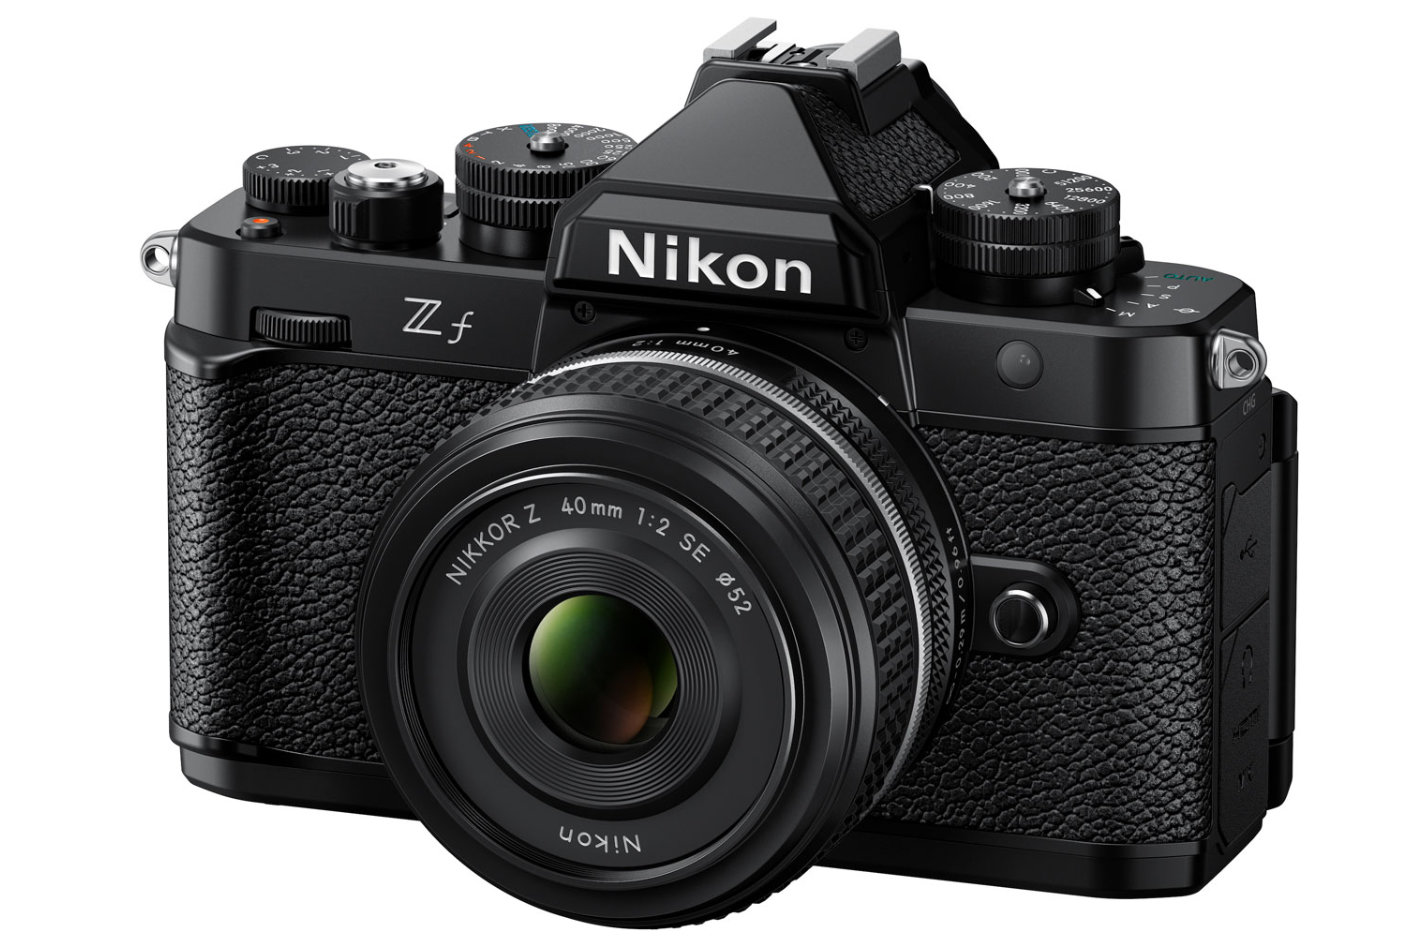 Nikon releases the Z f full-frame mirrorless camera